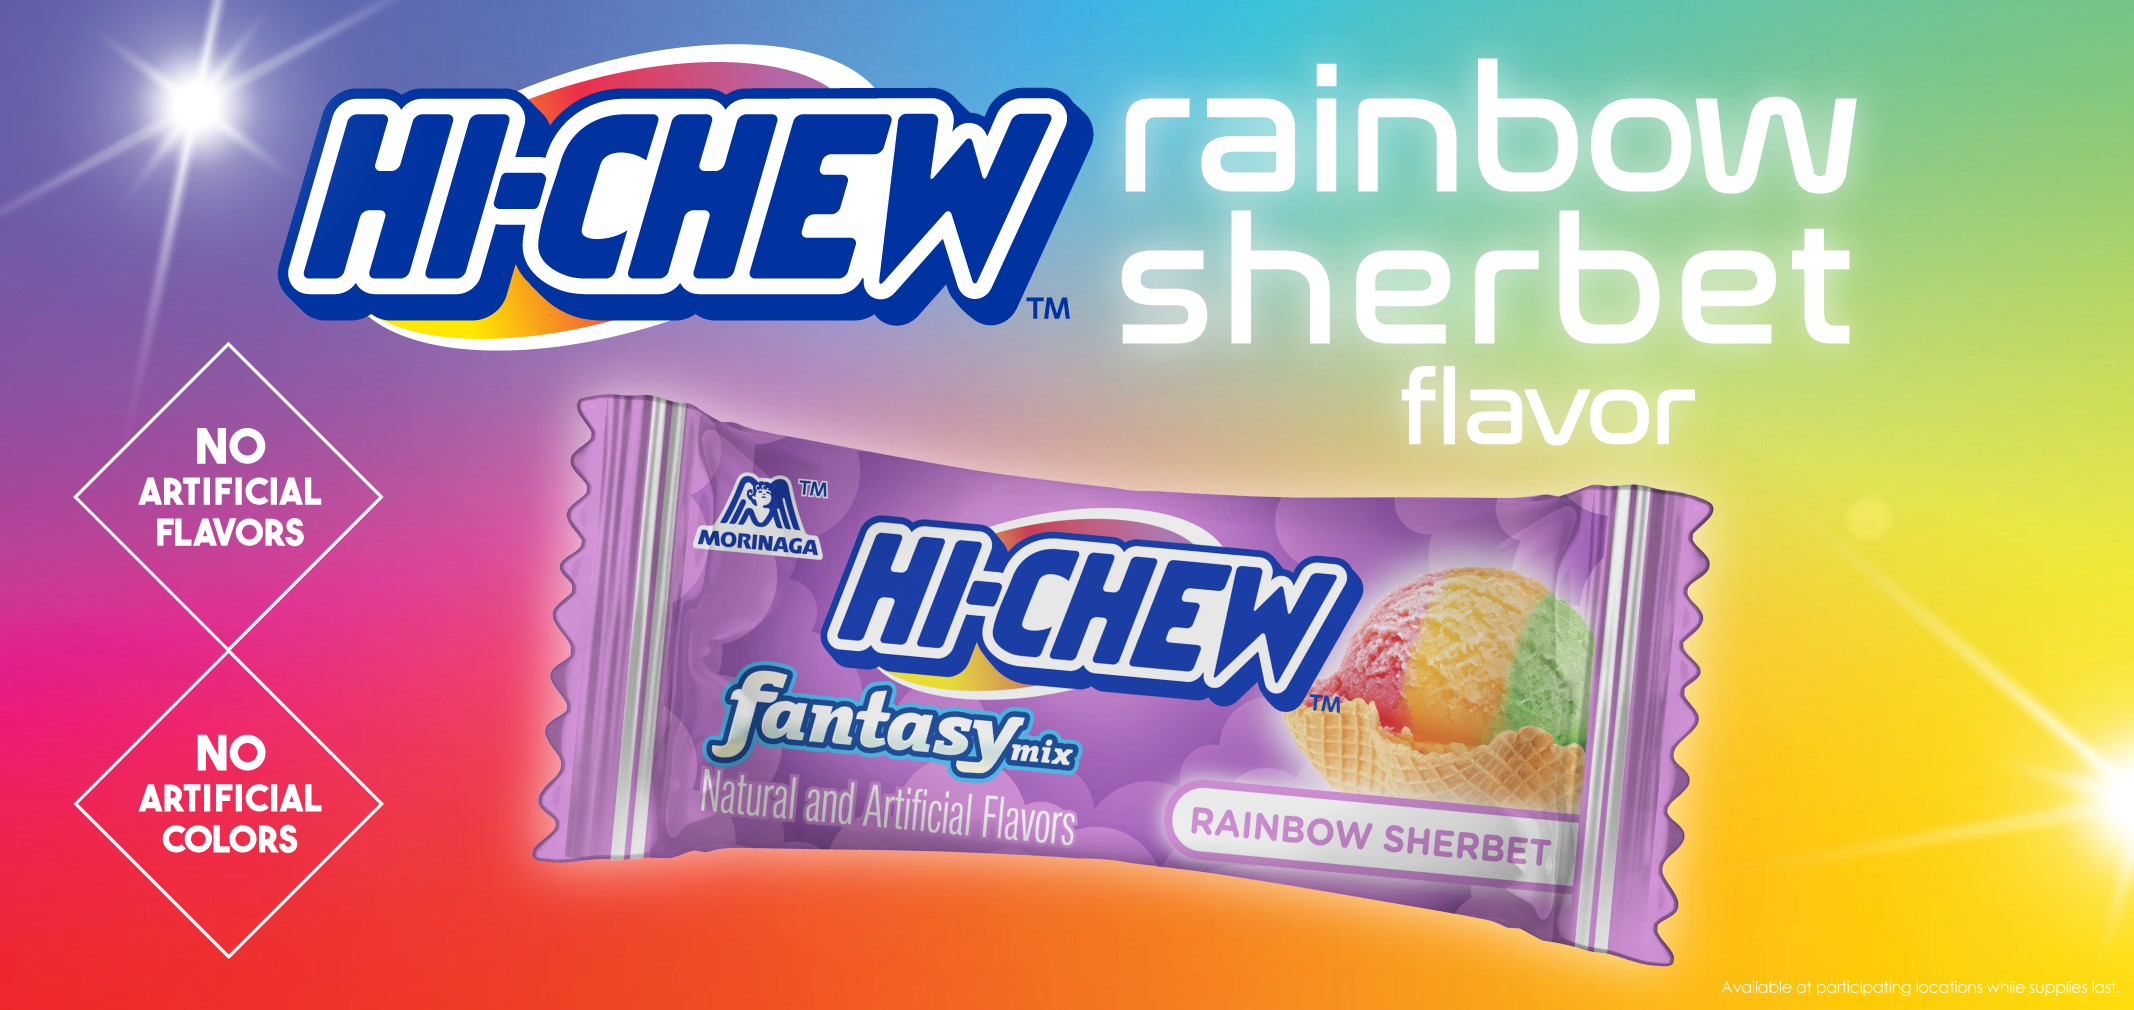 HI-CHEW Rainbow Sherbet Flavor label image